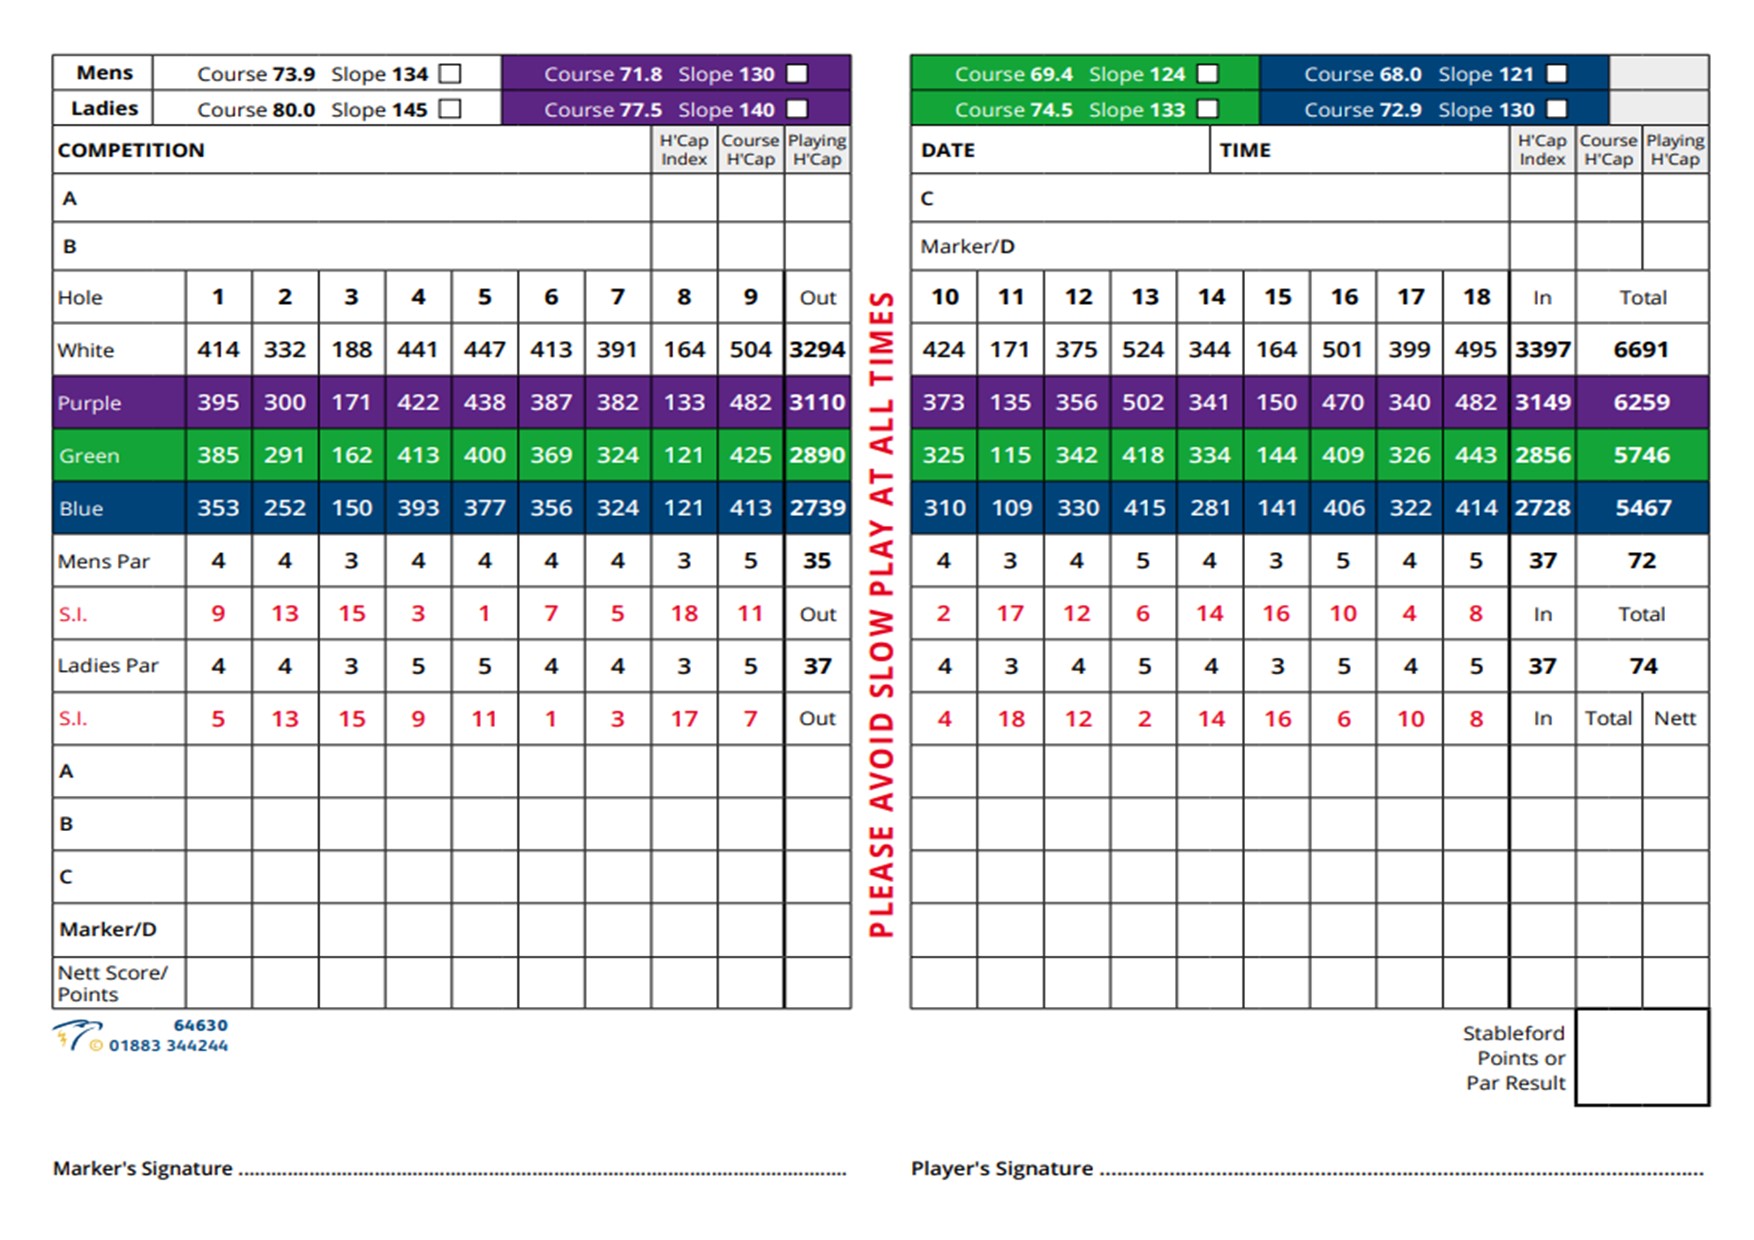 Nairn Dunbar Highland Links Course Scotland Course Scorecard